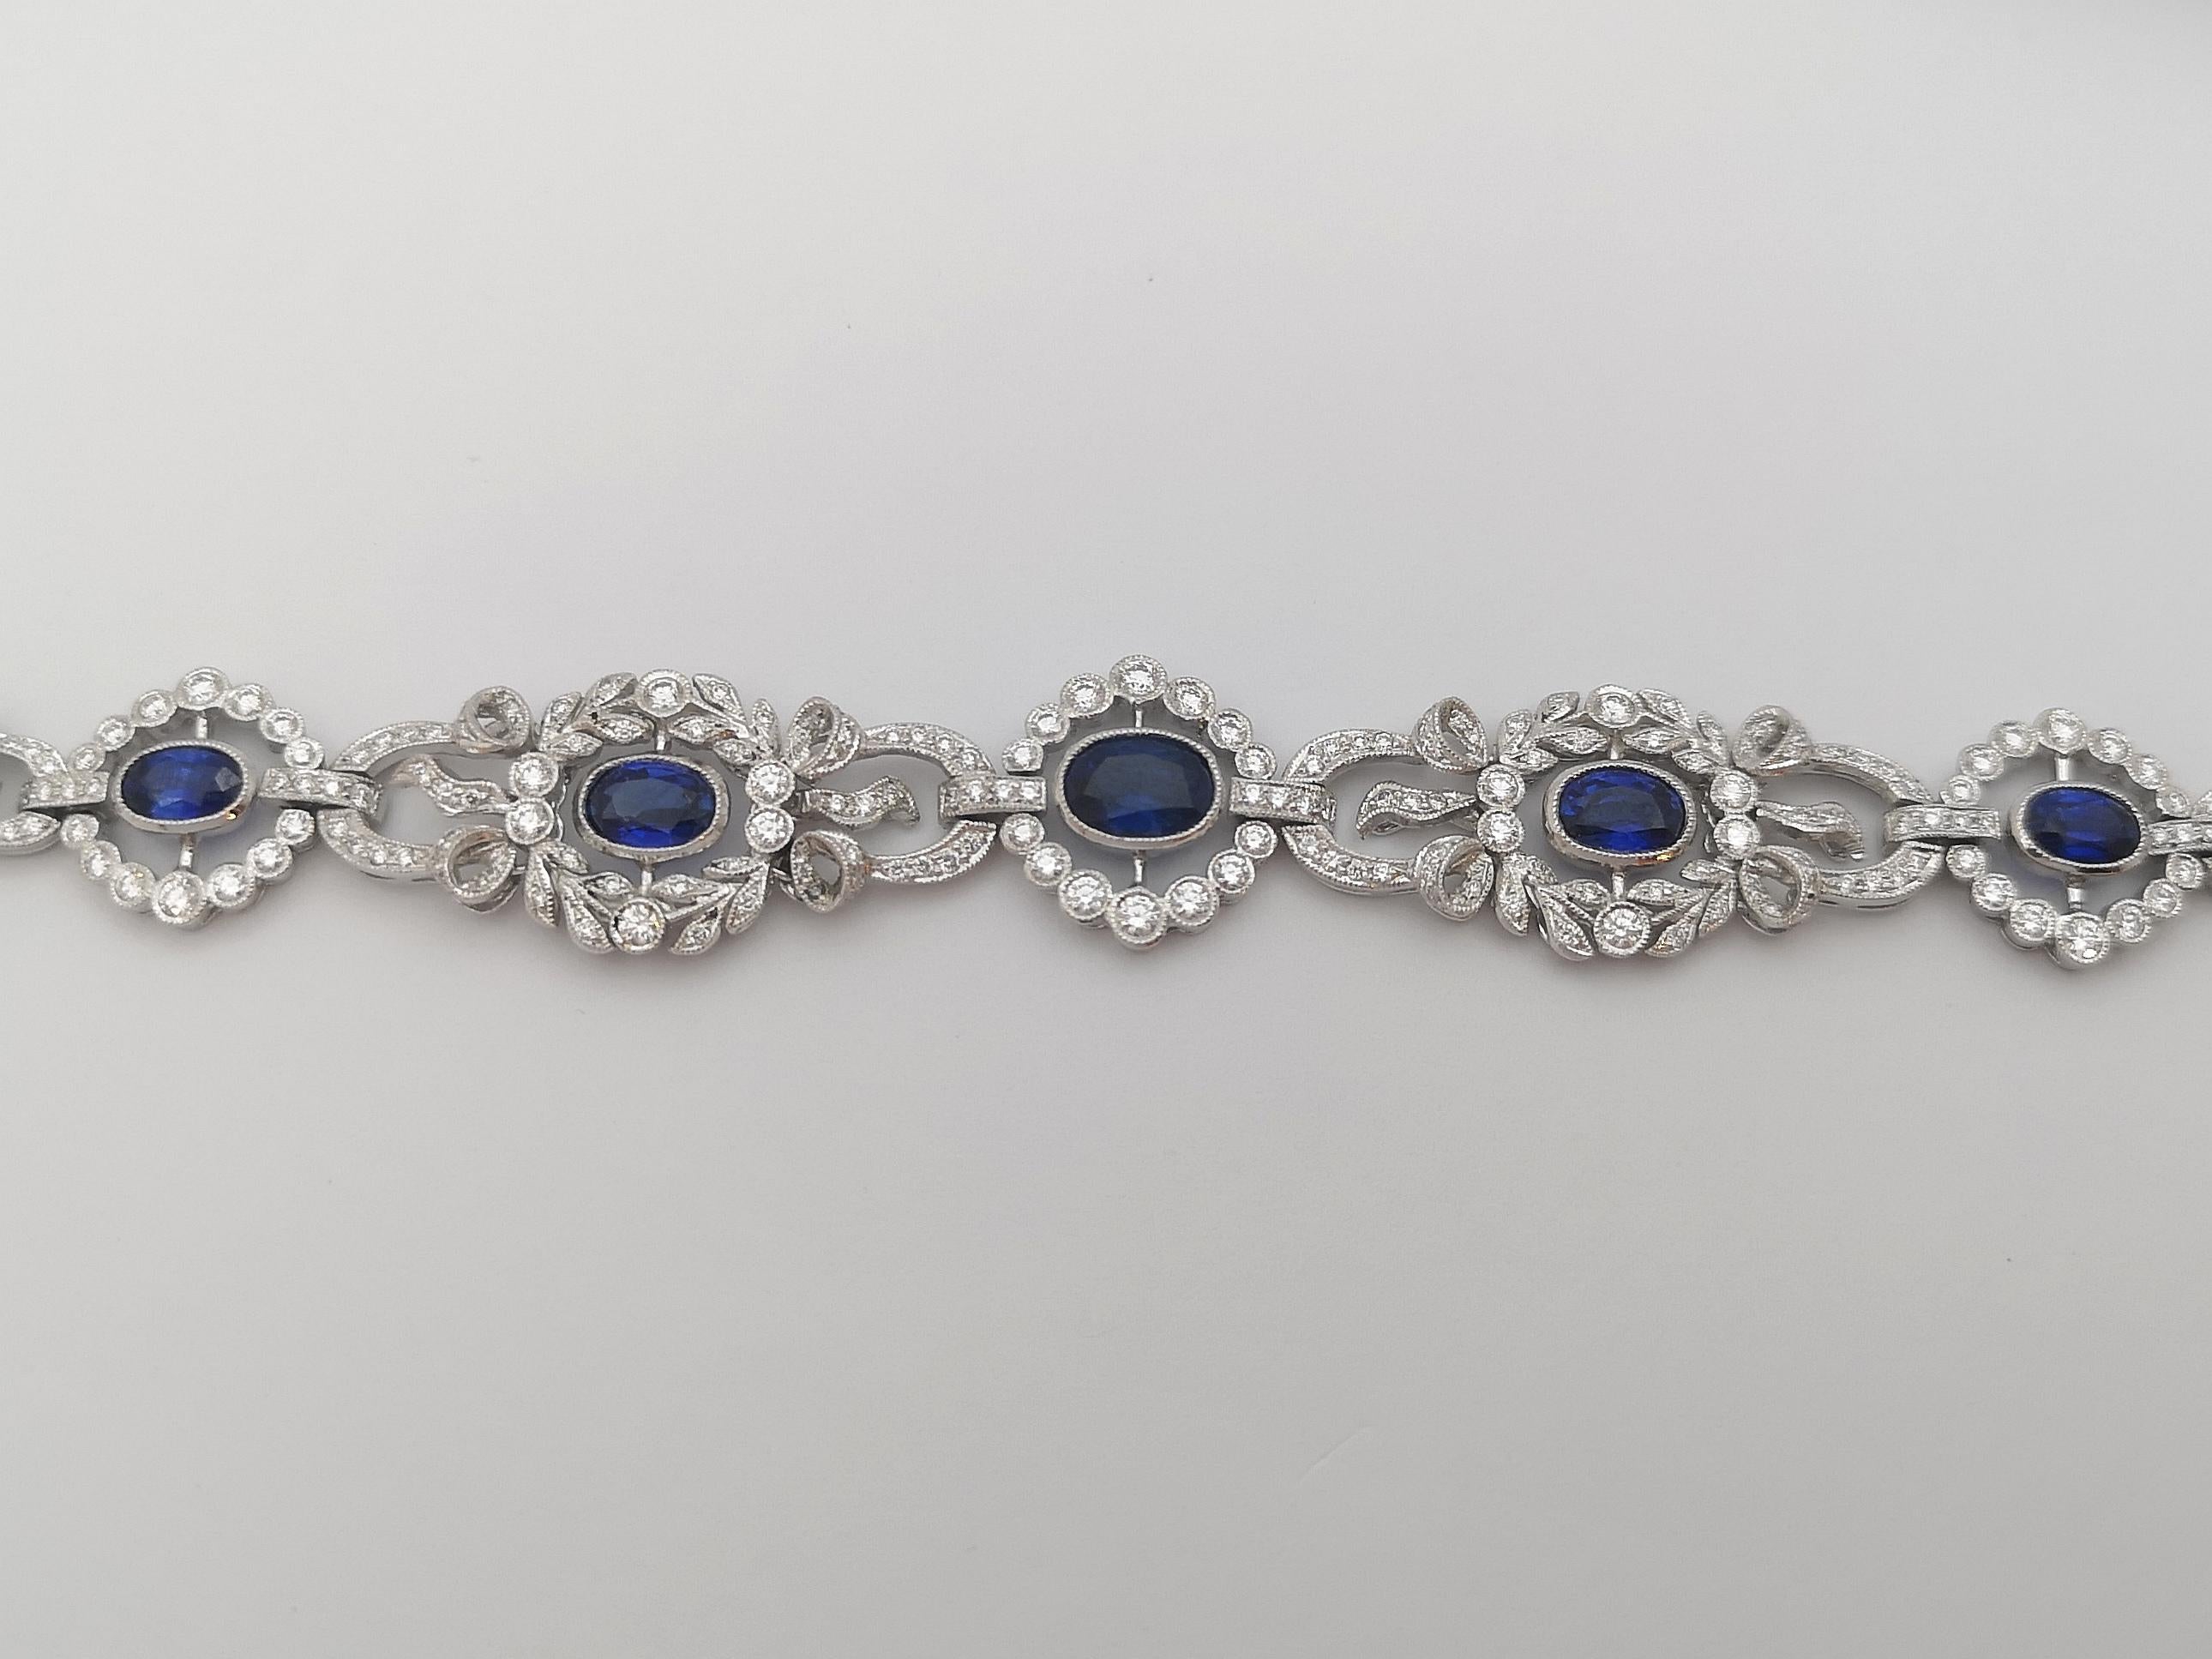  Blue Sapphire with Diamond Bracelet set in 18 Karat White Gold Settings For Sale 3